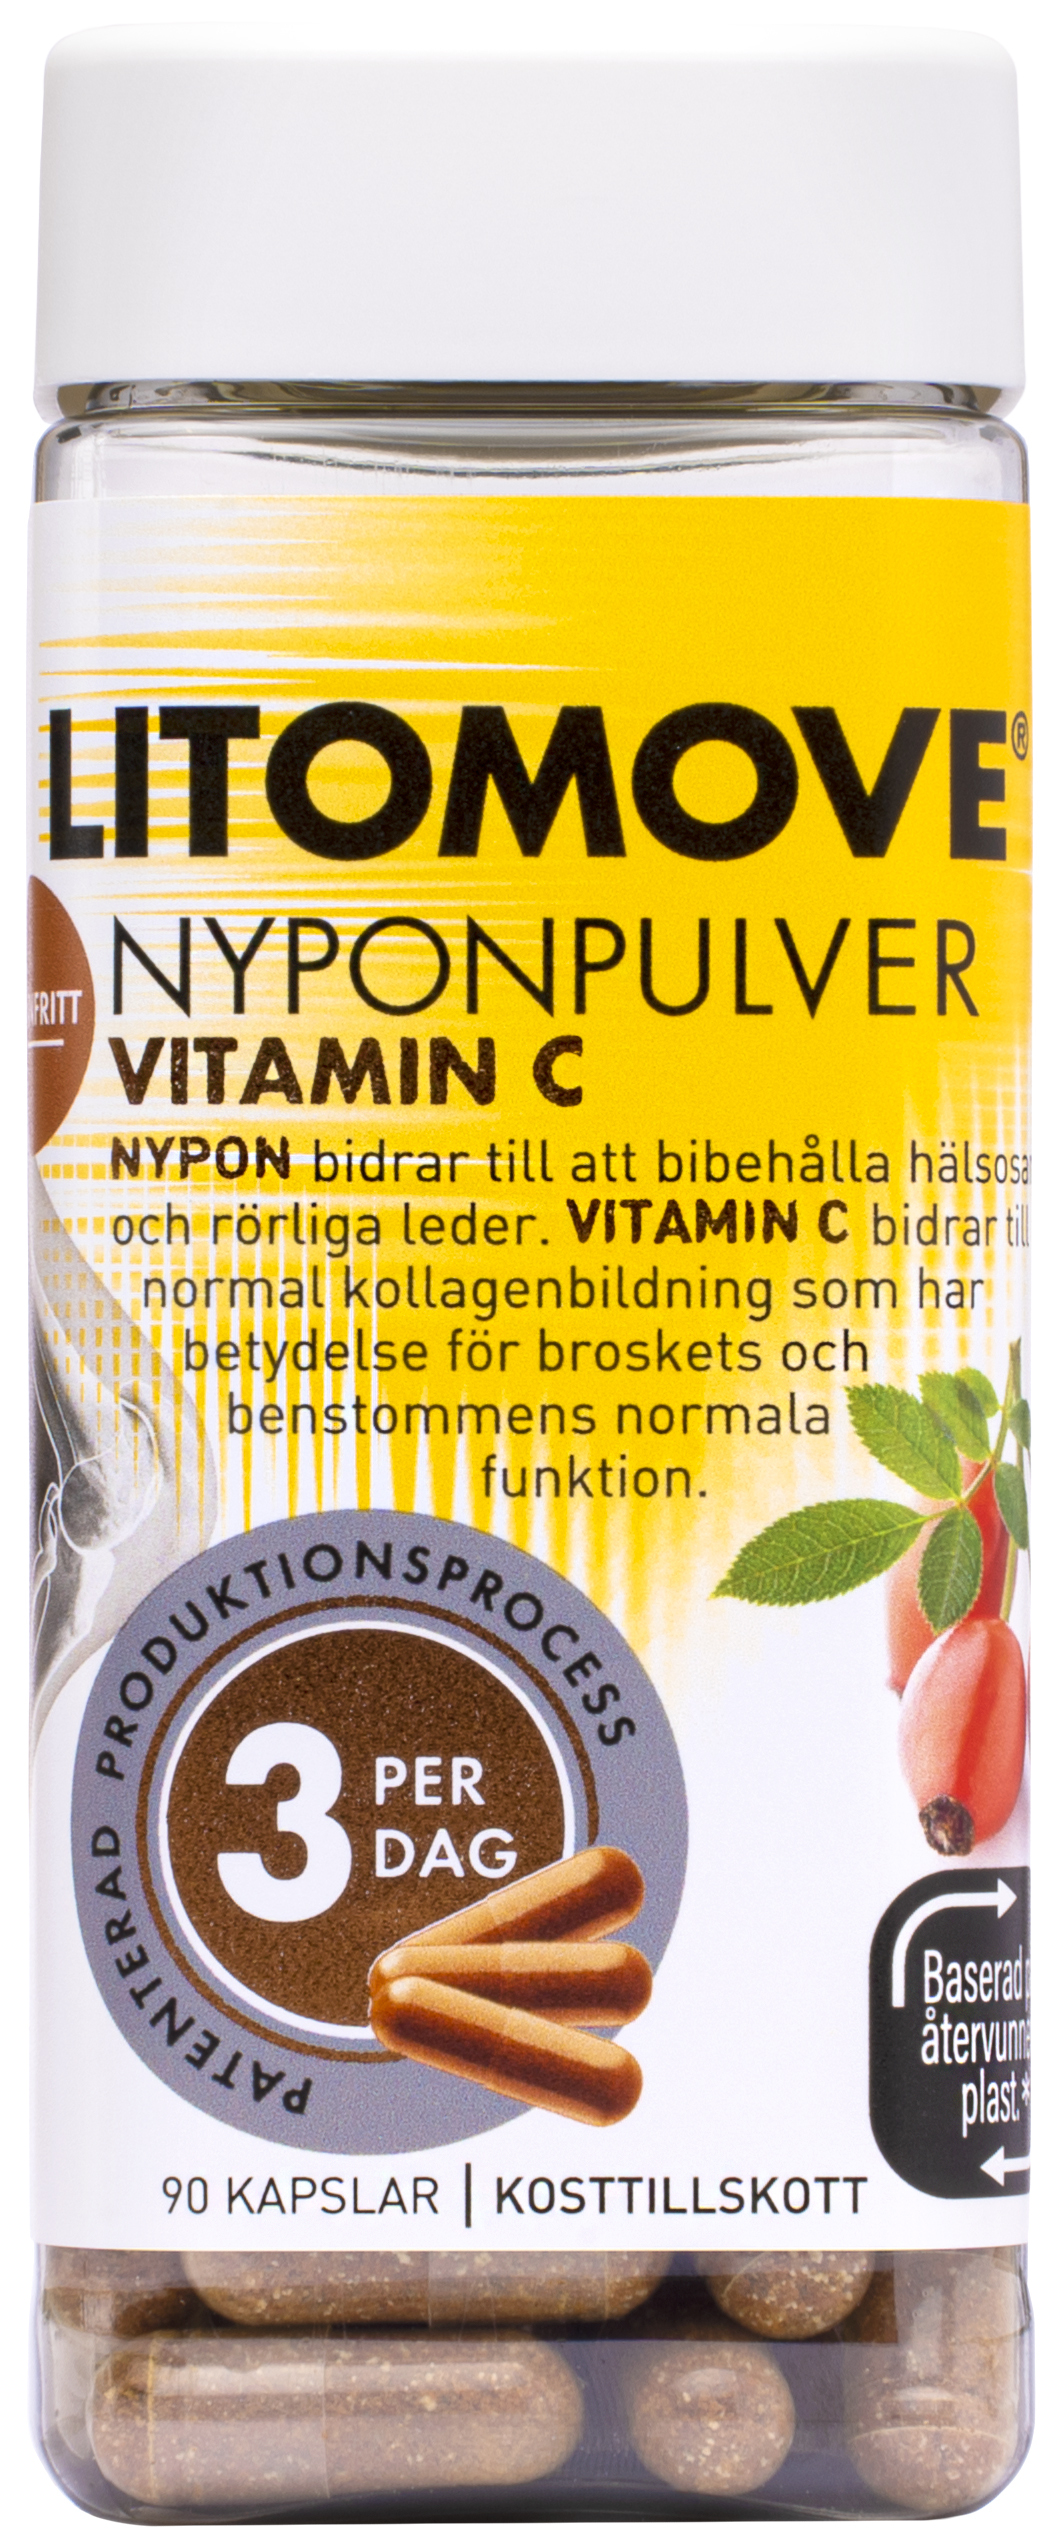 Litomove Nyponpulver Vitamin C 90 kapslar